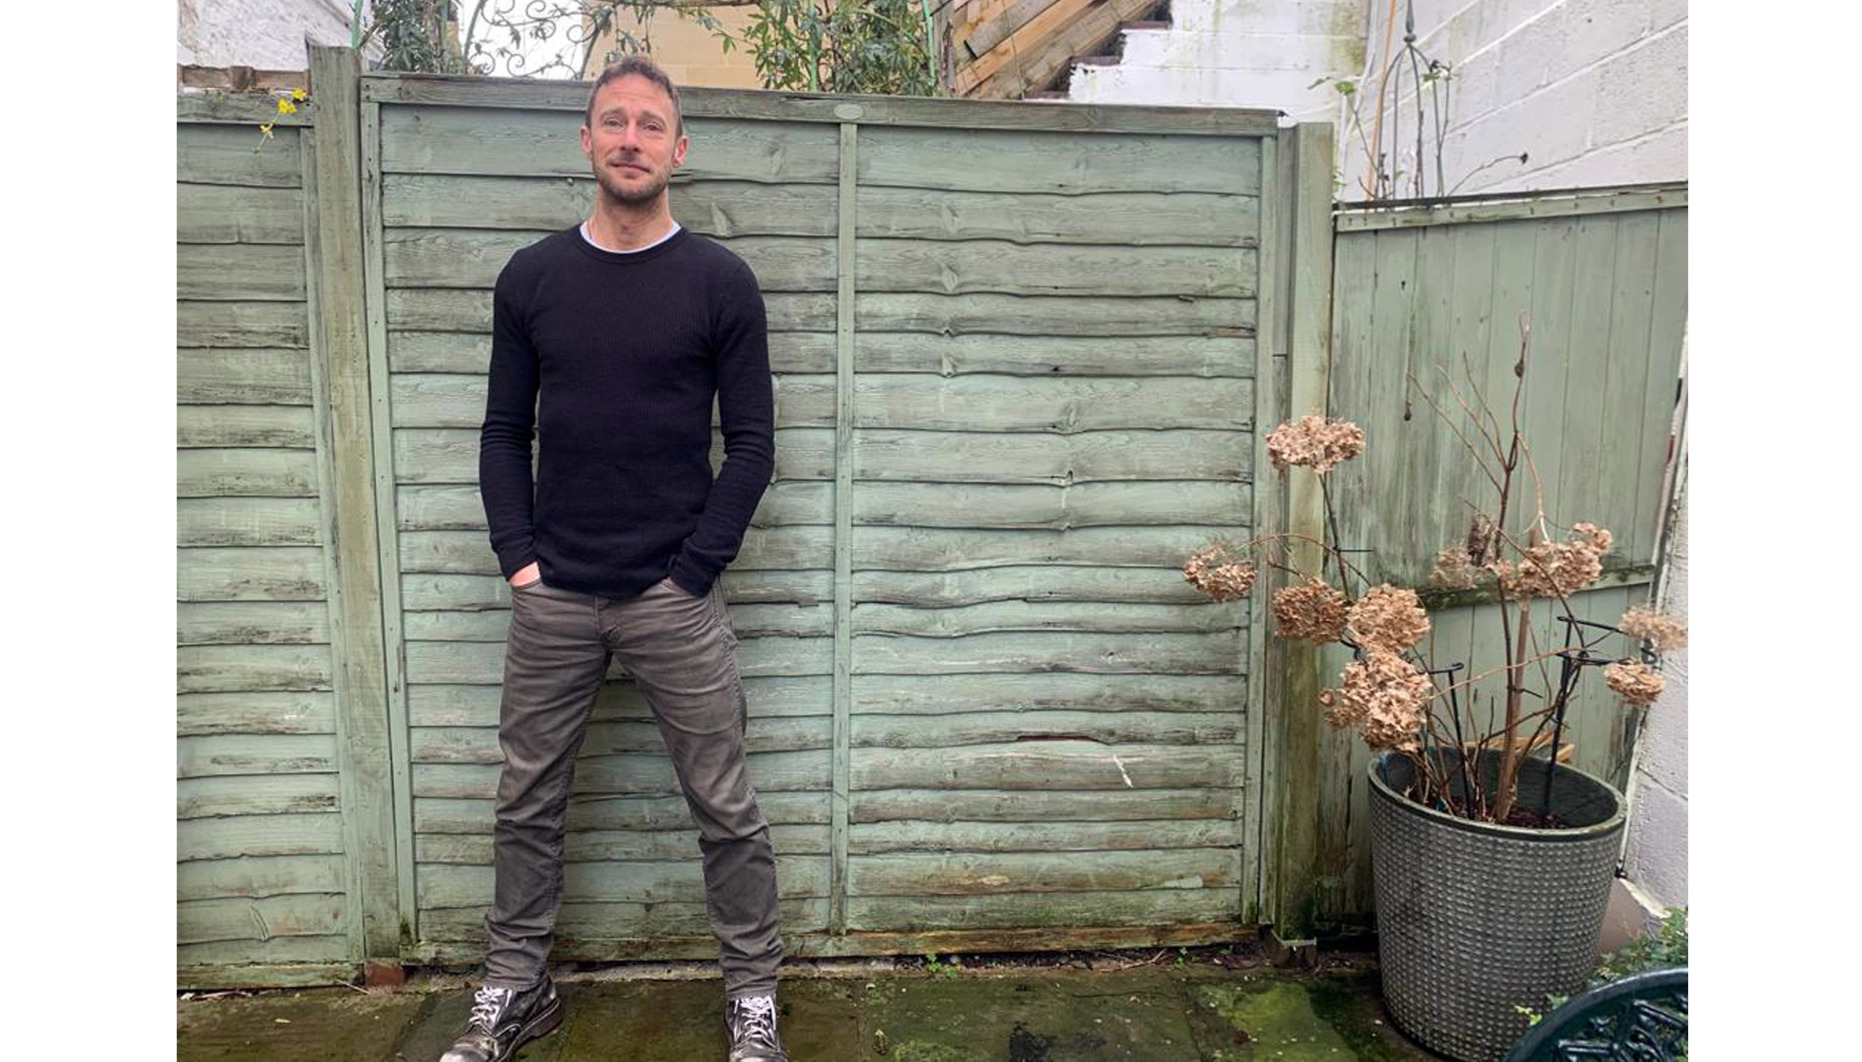 Author James standing in a garden